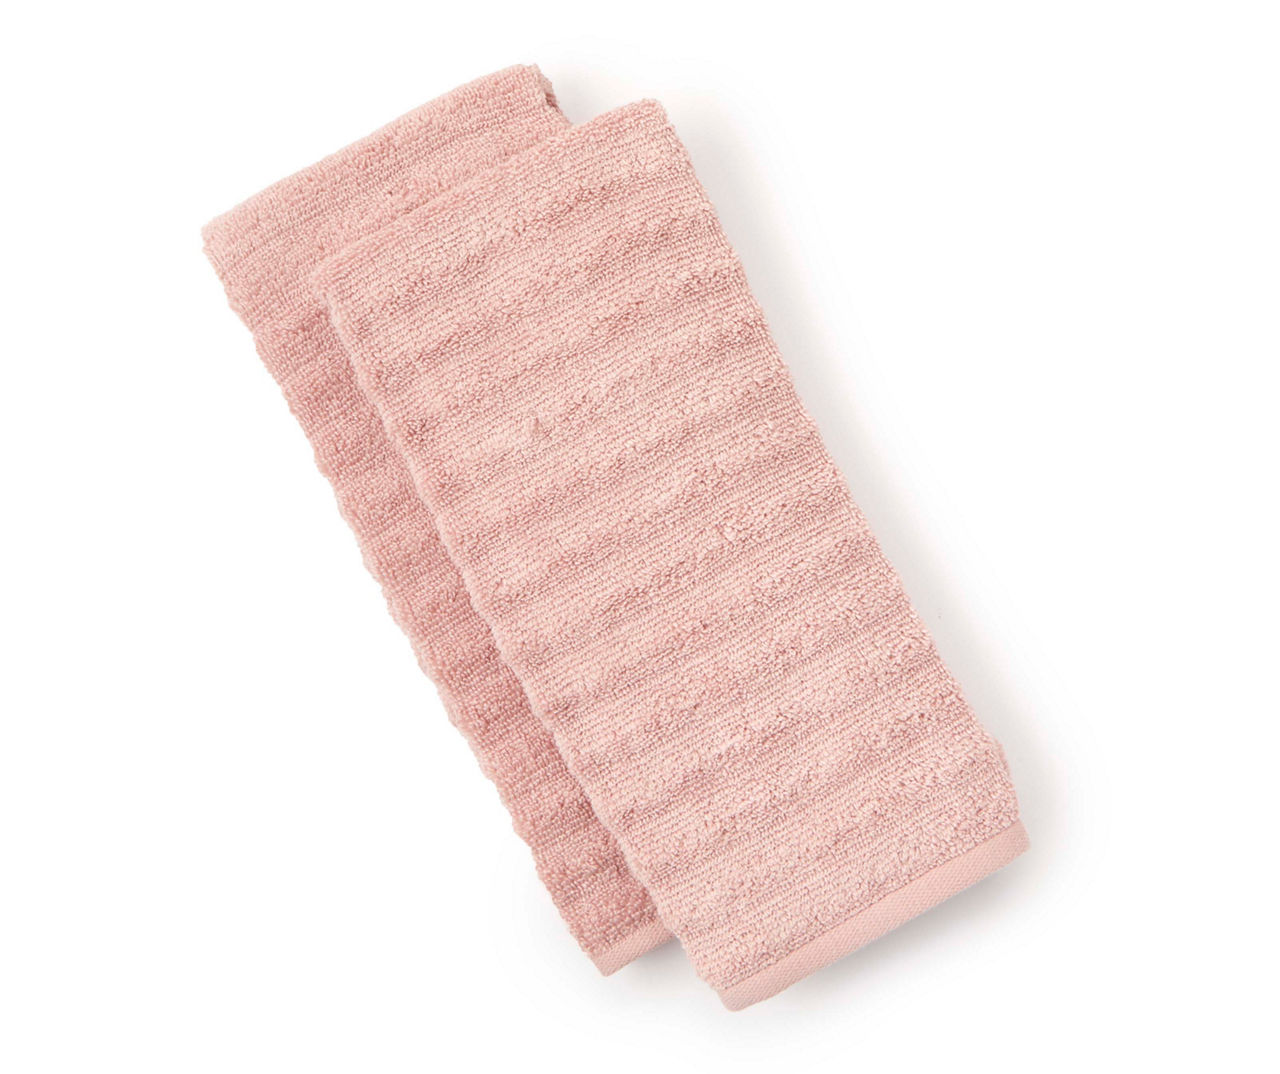 Pale Mauve Textured Stripe Hand Towel, 2-Pack